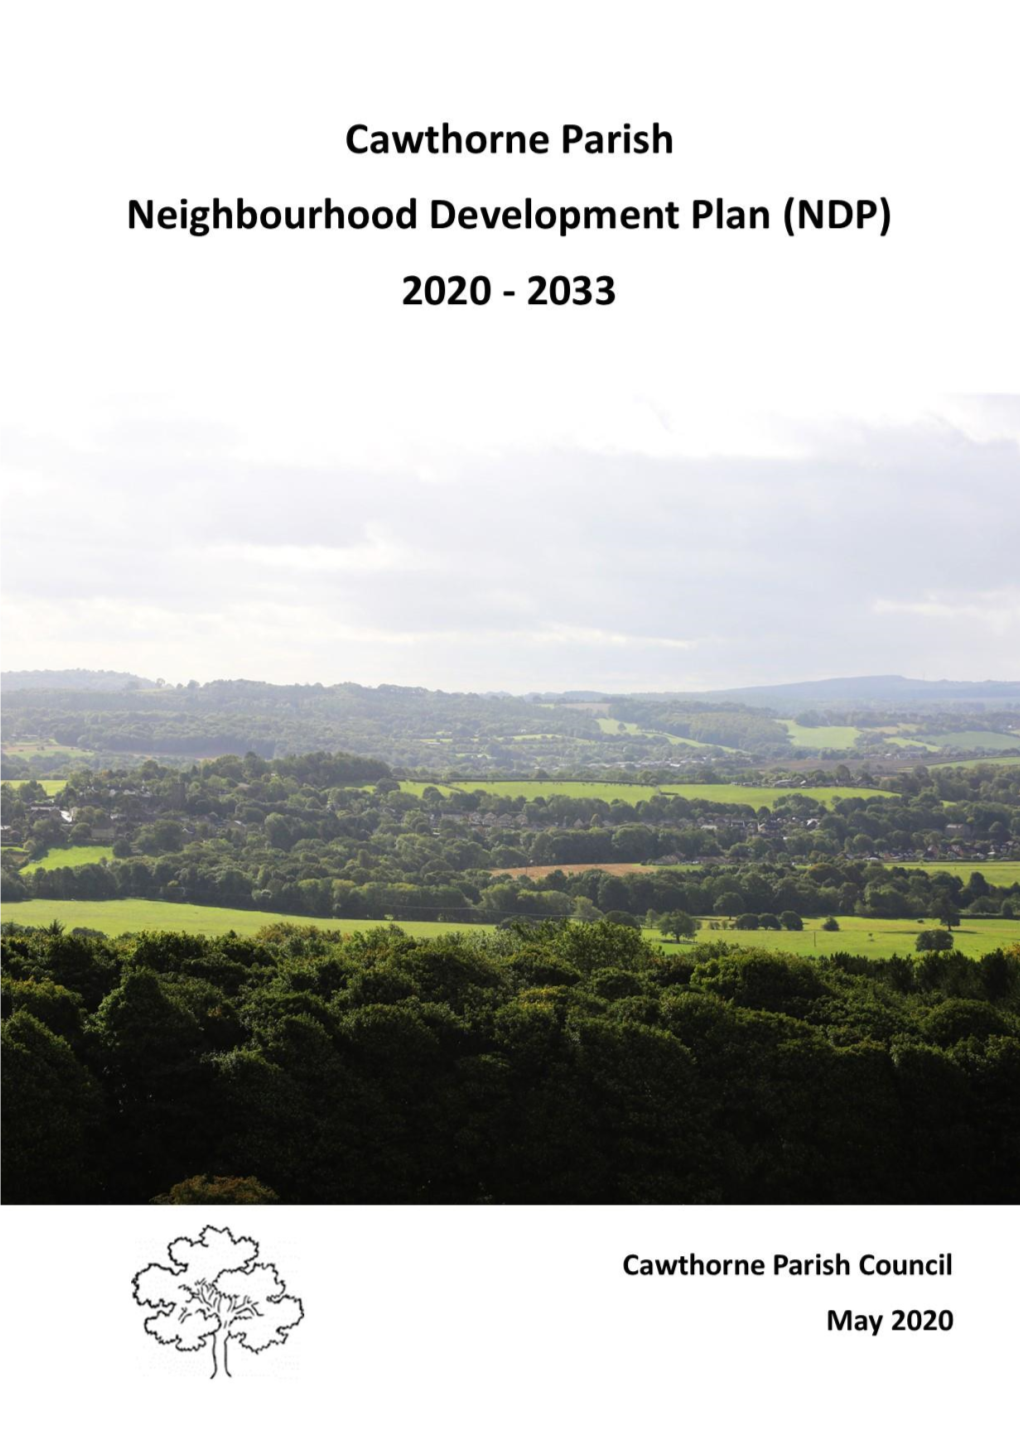 Cawthorne Parish Neighbourhood Development Plan (NDP) 2020-2033